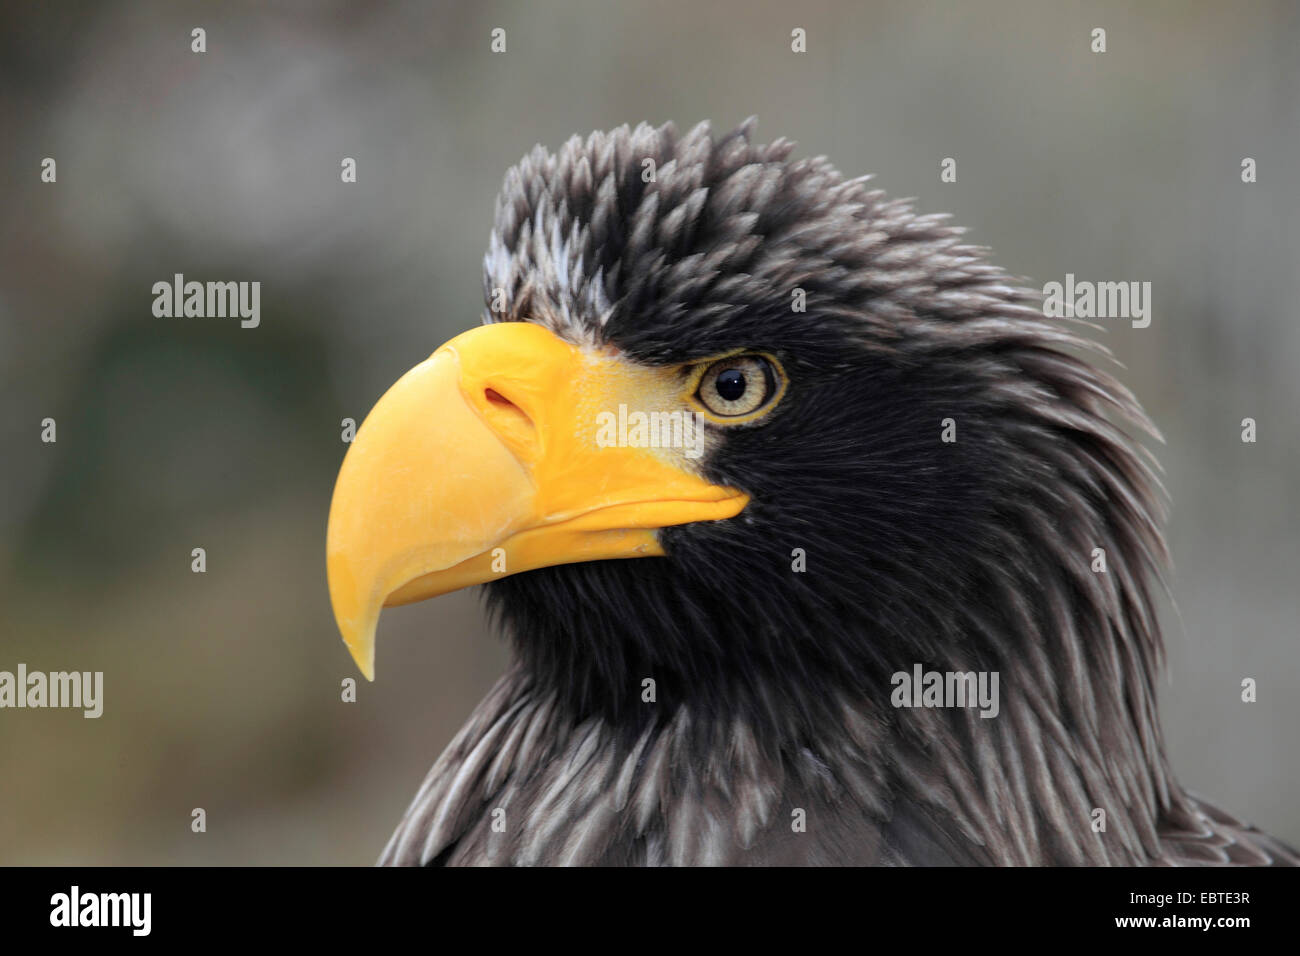 Steller's sea eagle (Haliaeetus pelagicus), portrait Stock Photo